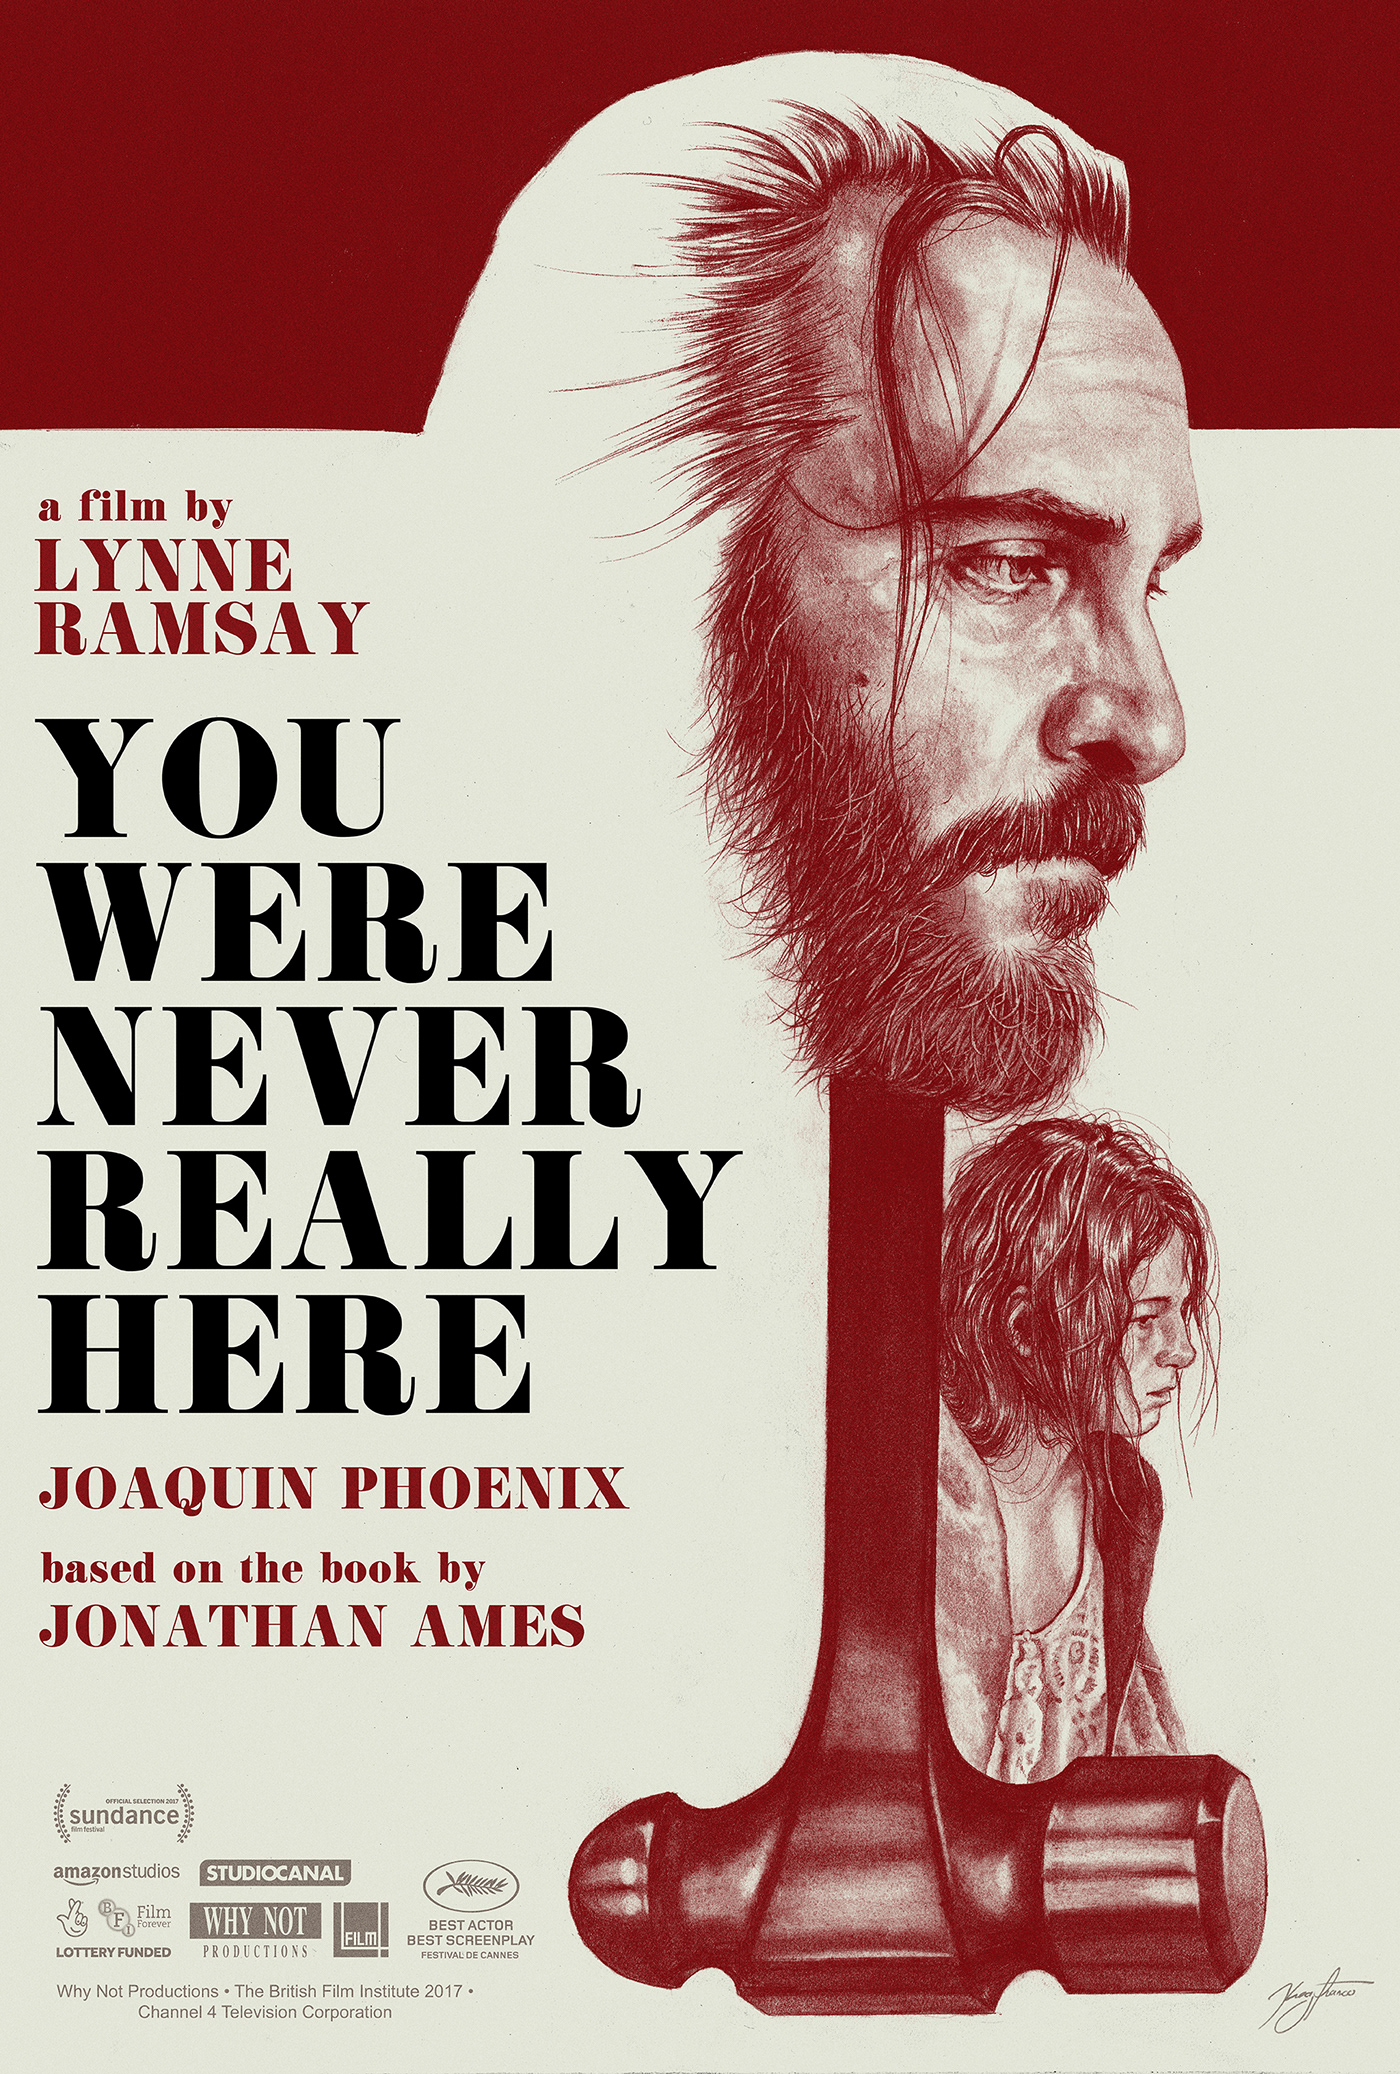 You Were Never Really Here joaquin phoenix Amazon Studios studio canal Film movie poster Lynne Ramsay jonathan ames Ekaterina Samsonov